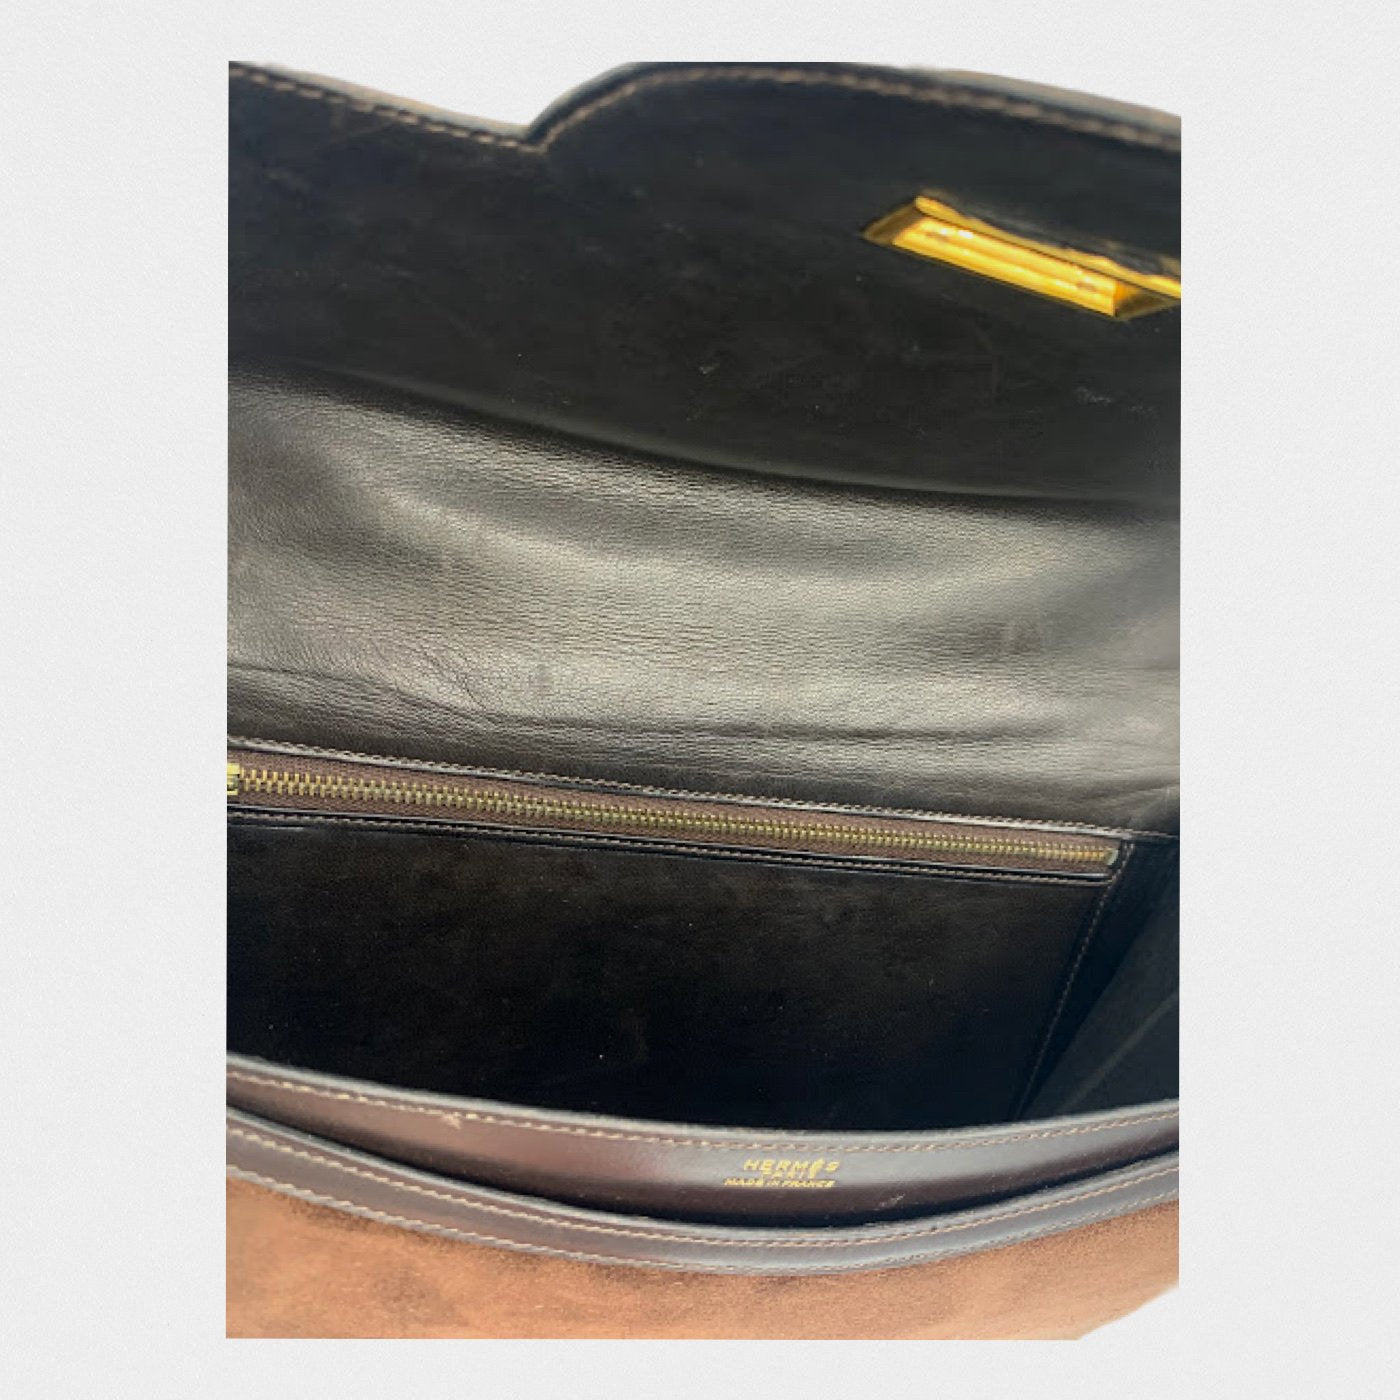 Lysis vintage Hermes Sandrine bag - 1970s